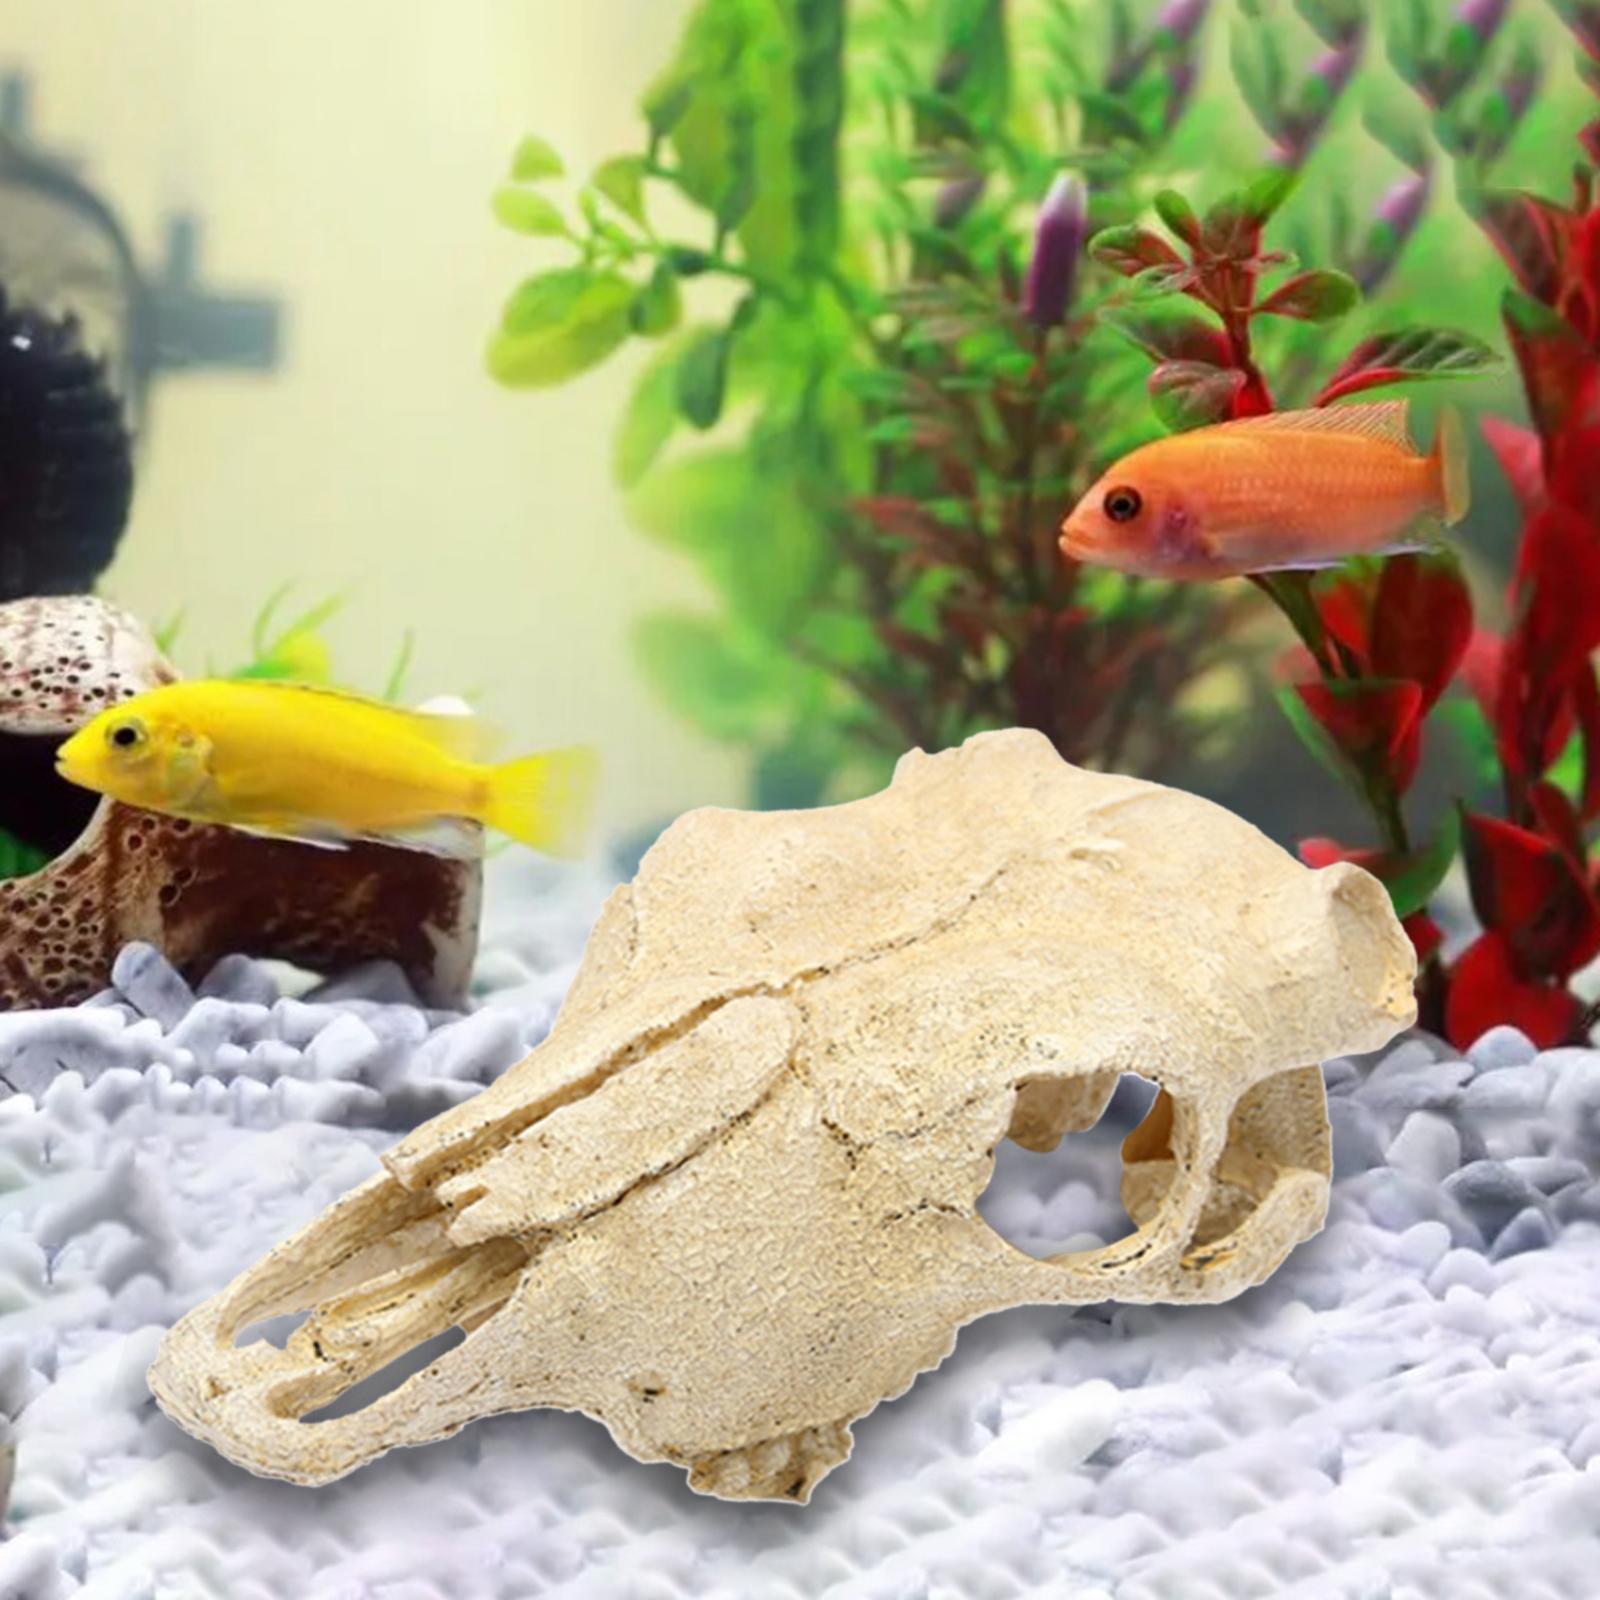 Aquarium Skull Head Ornaments Fish Tank Landscaping for Outdoor Halloween